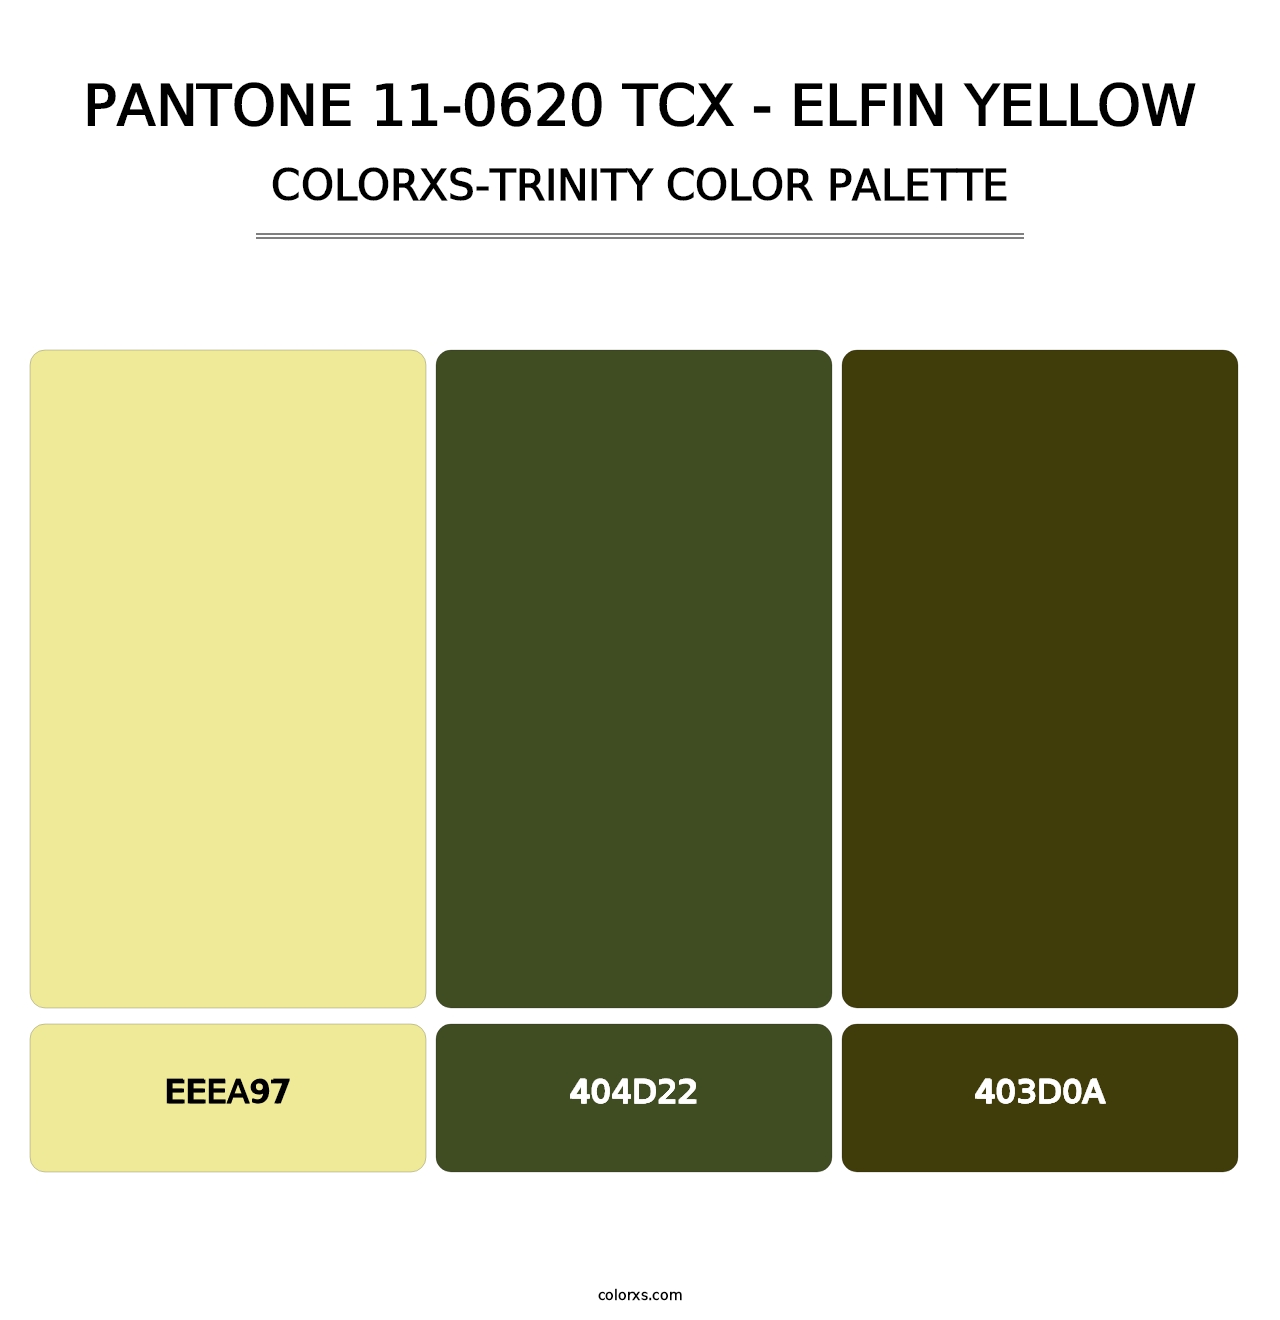 PANTONE 11-0620 TCX - Elfin Yellow - Colorxs Trinity Palette